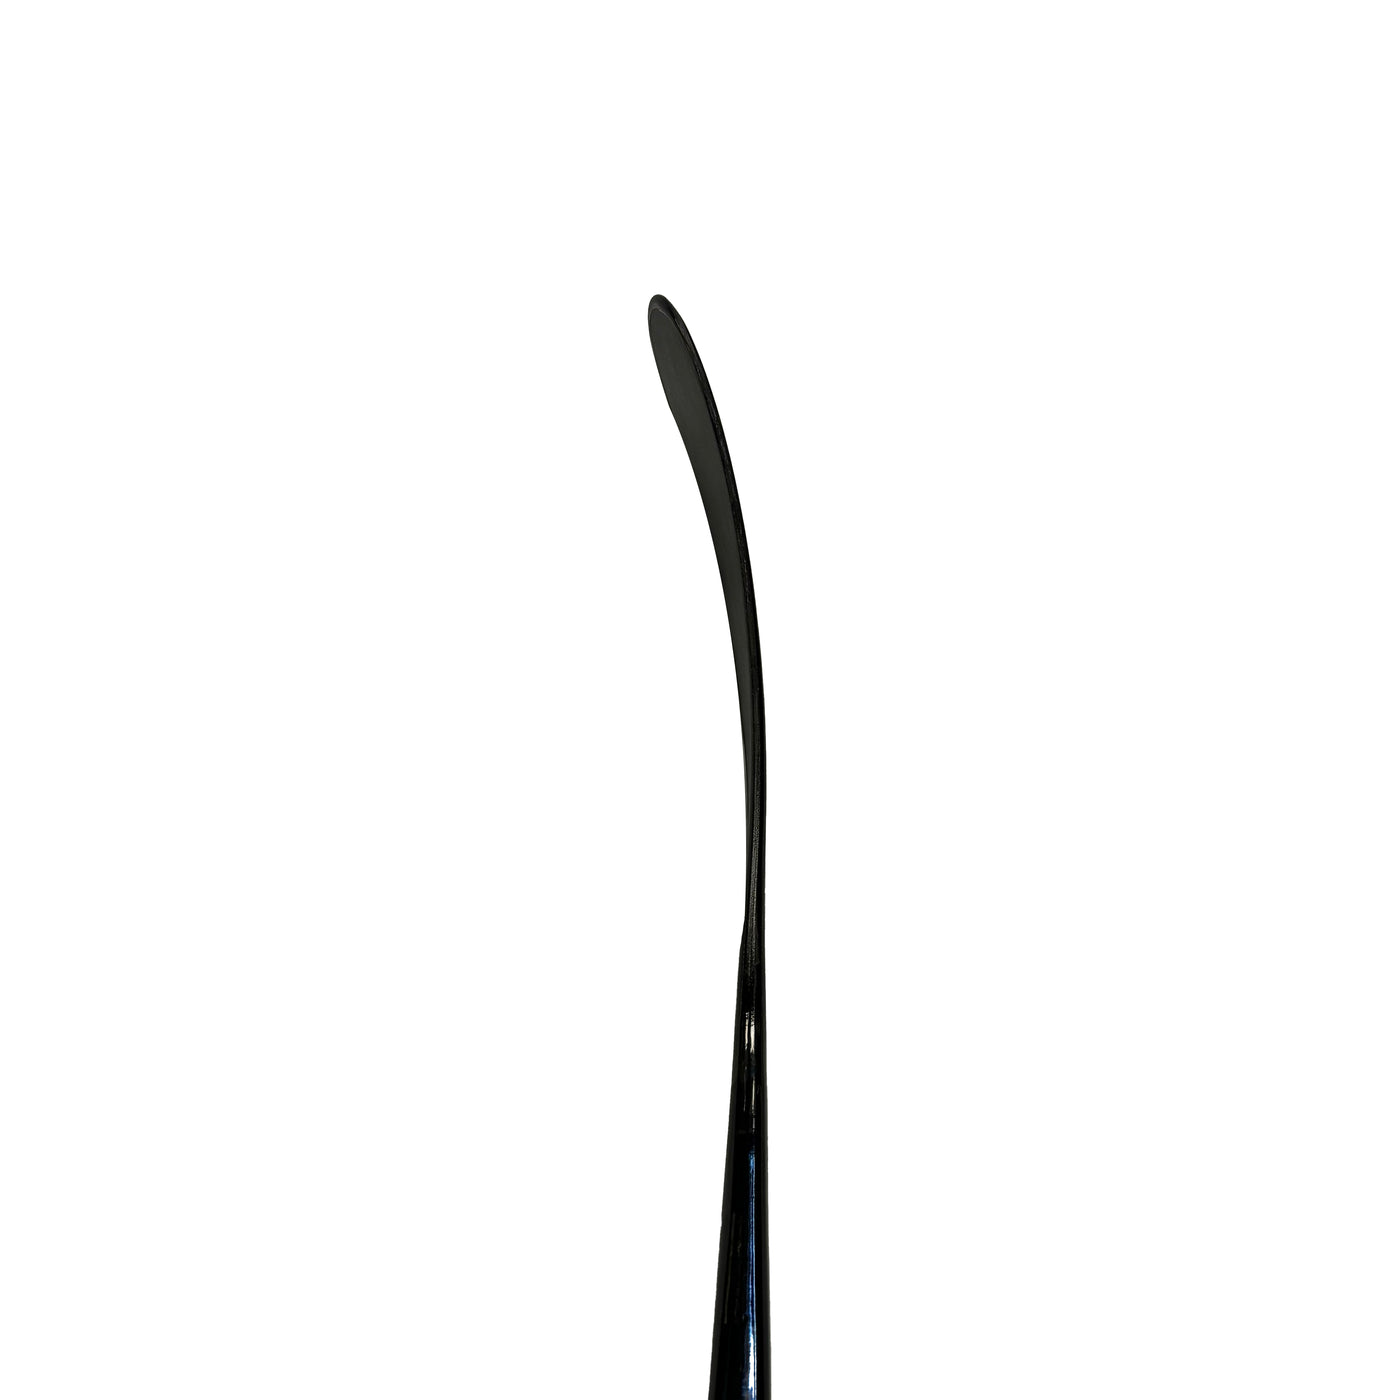 Bauer Nexus Sync - Pro Stock Hockey Stick - Barr